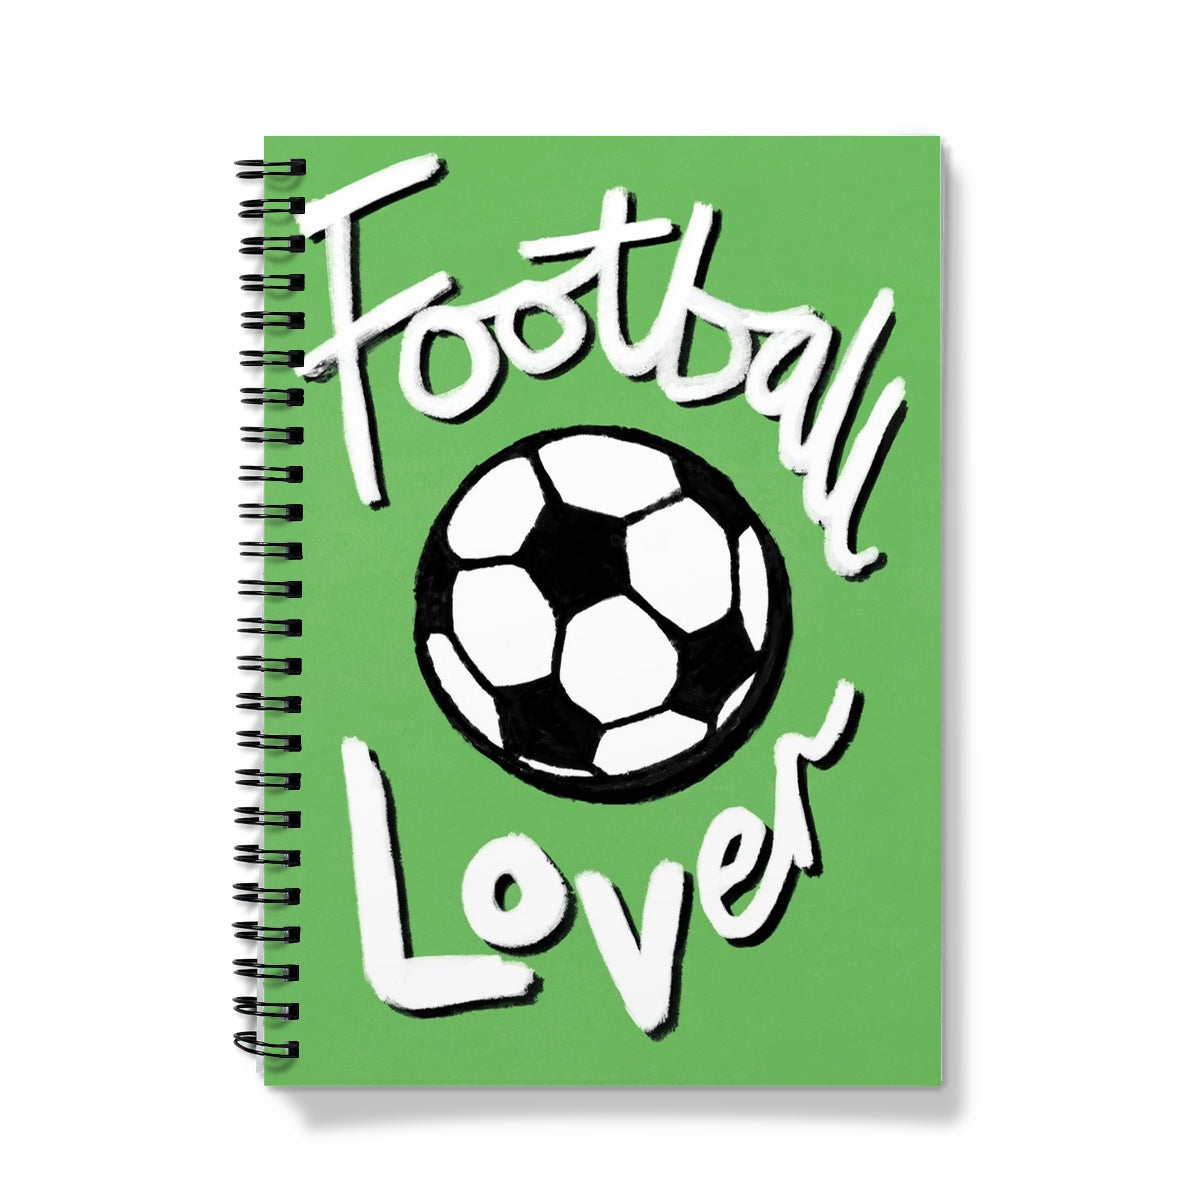 Football Lover Print - Green, White, Black Notebook